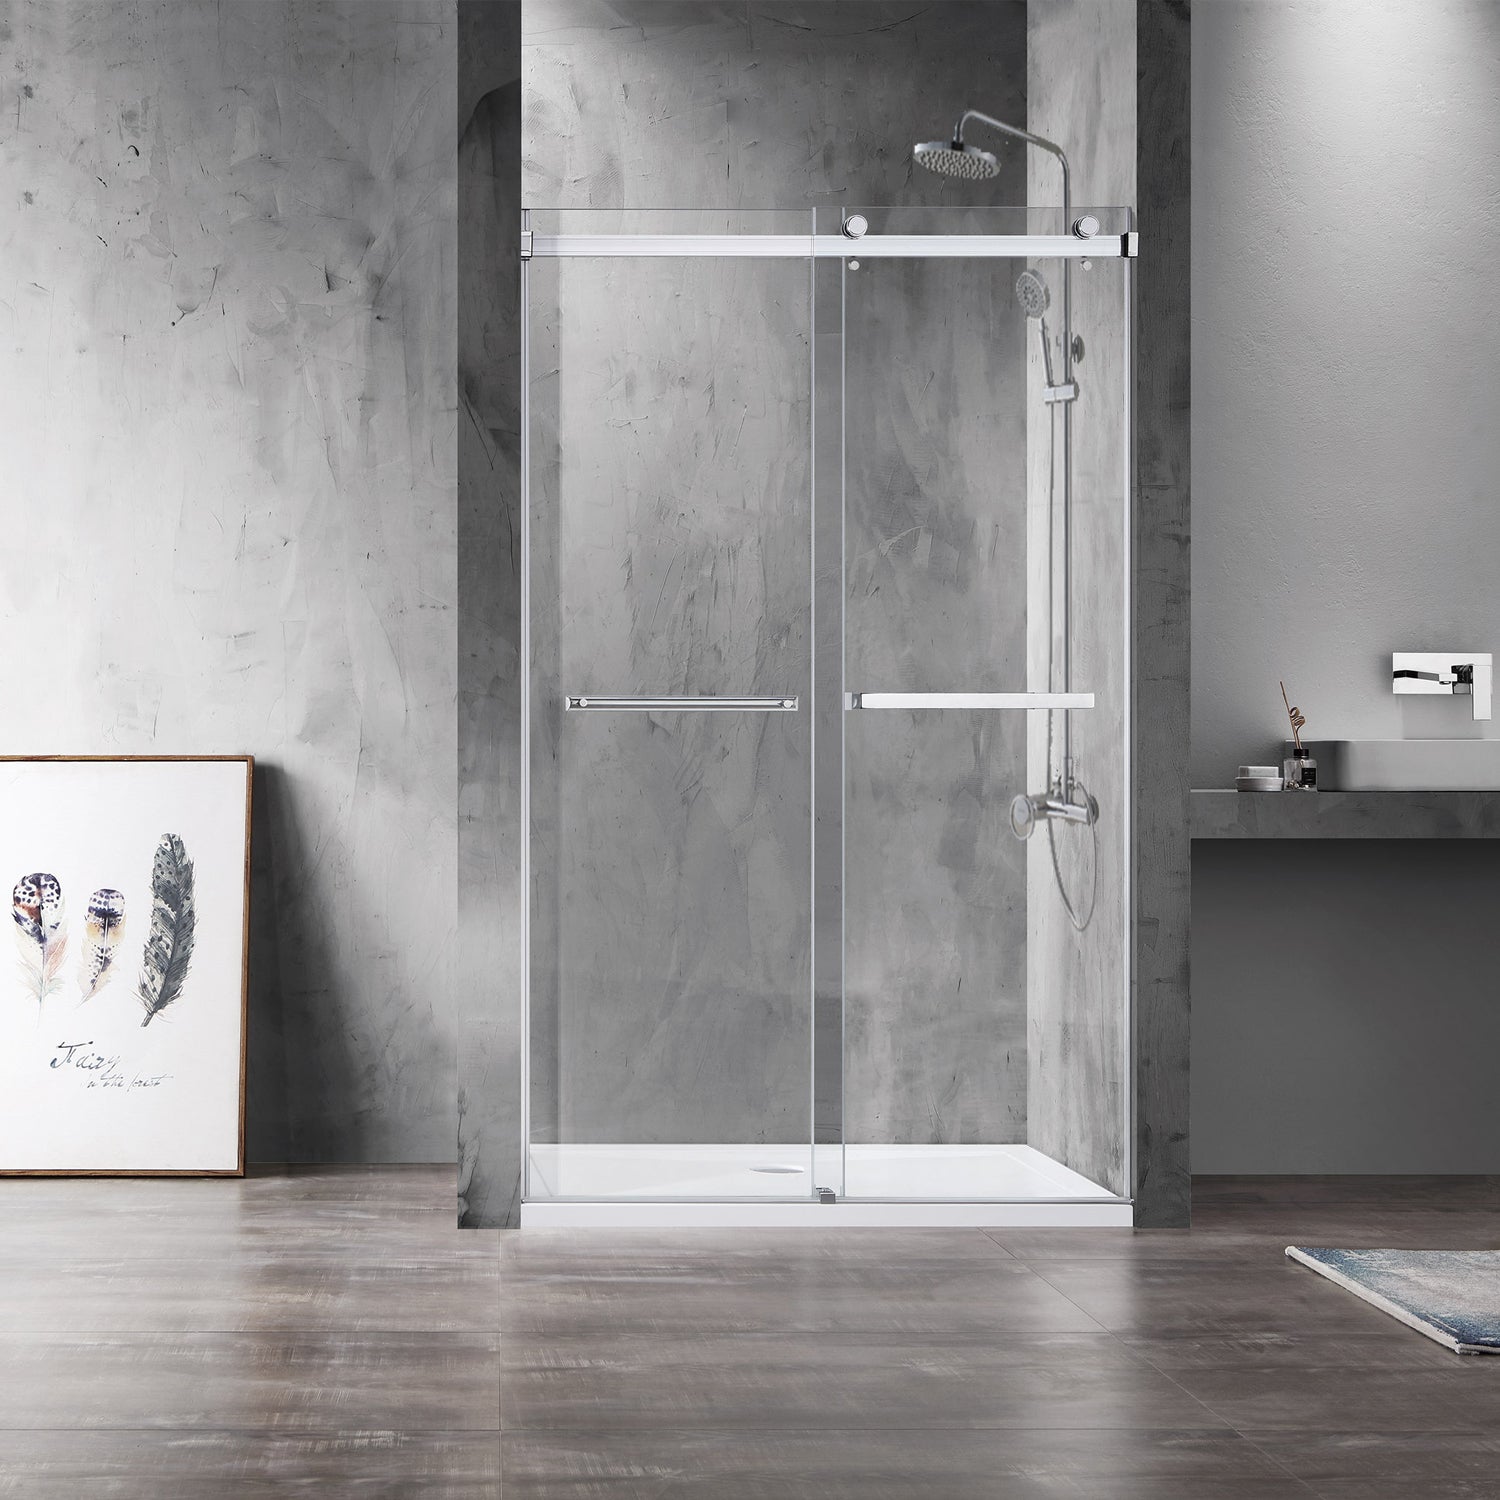 Villena Rectangle Single Sliding Frameless Shower Enclosure – Vinnova Design